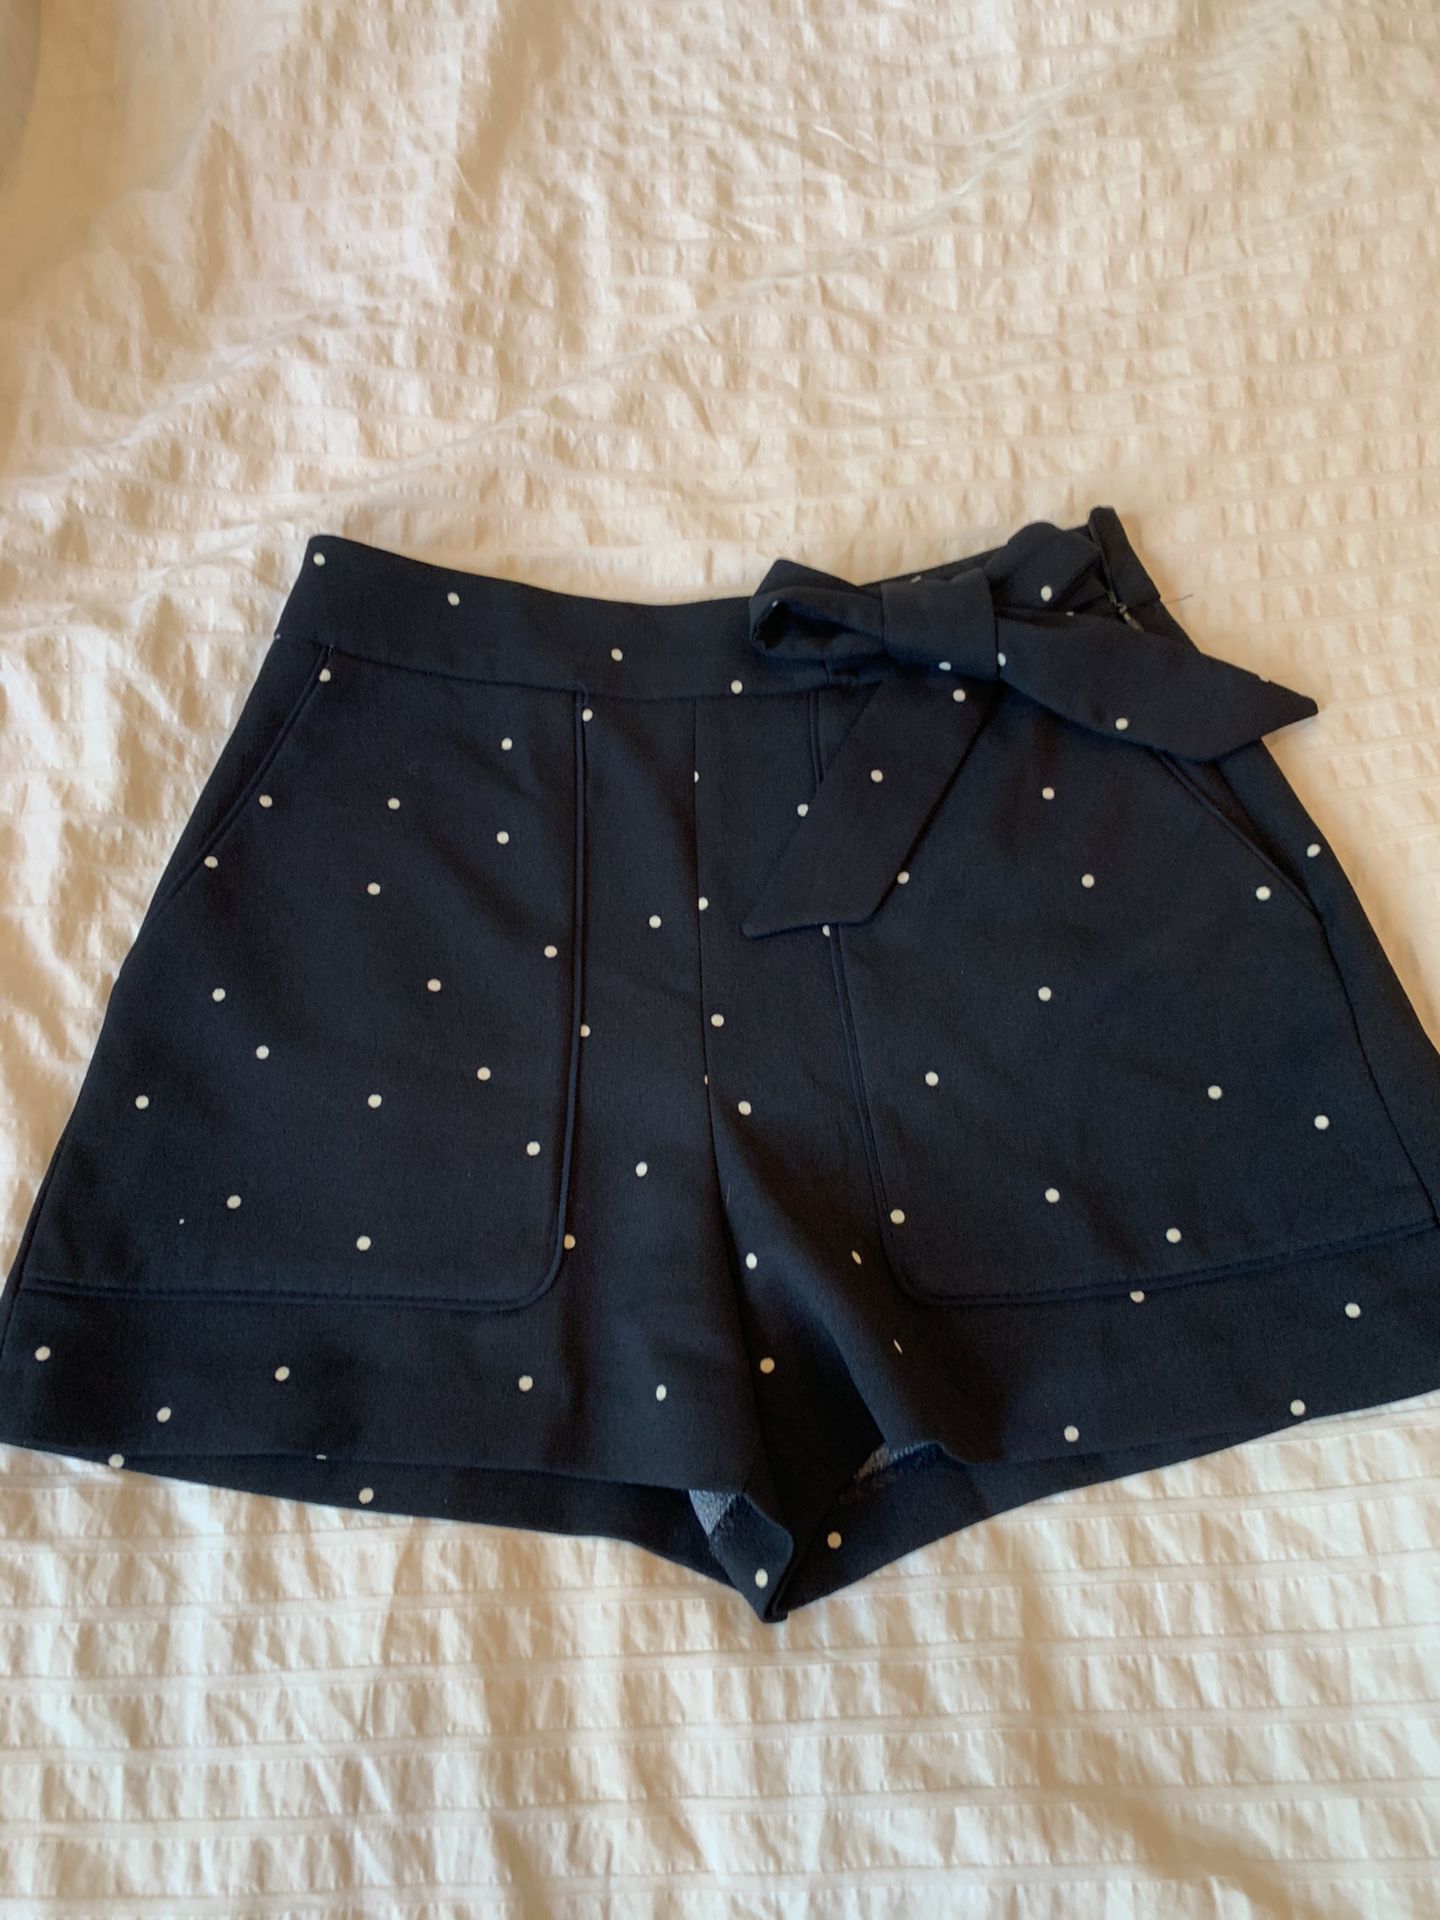 Zara Women’s Dress Shorts